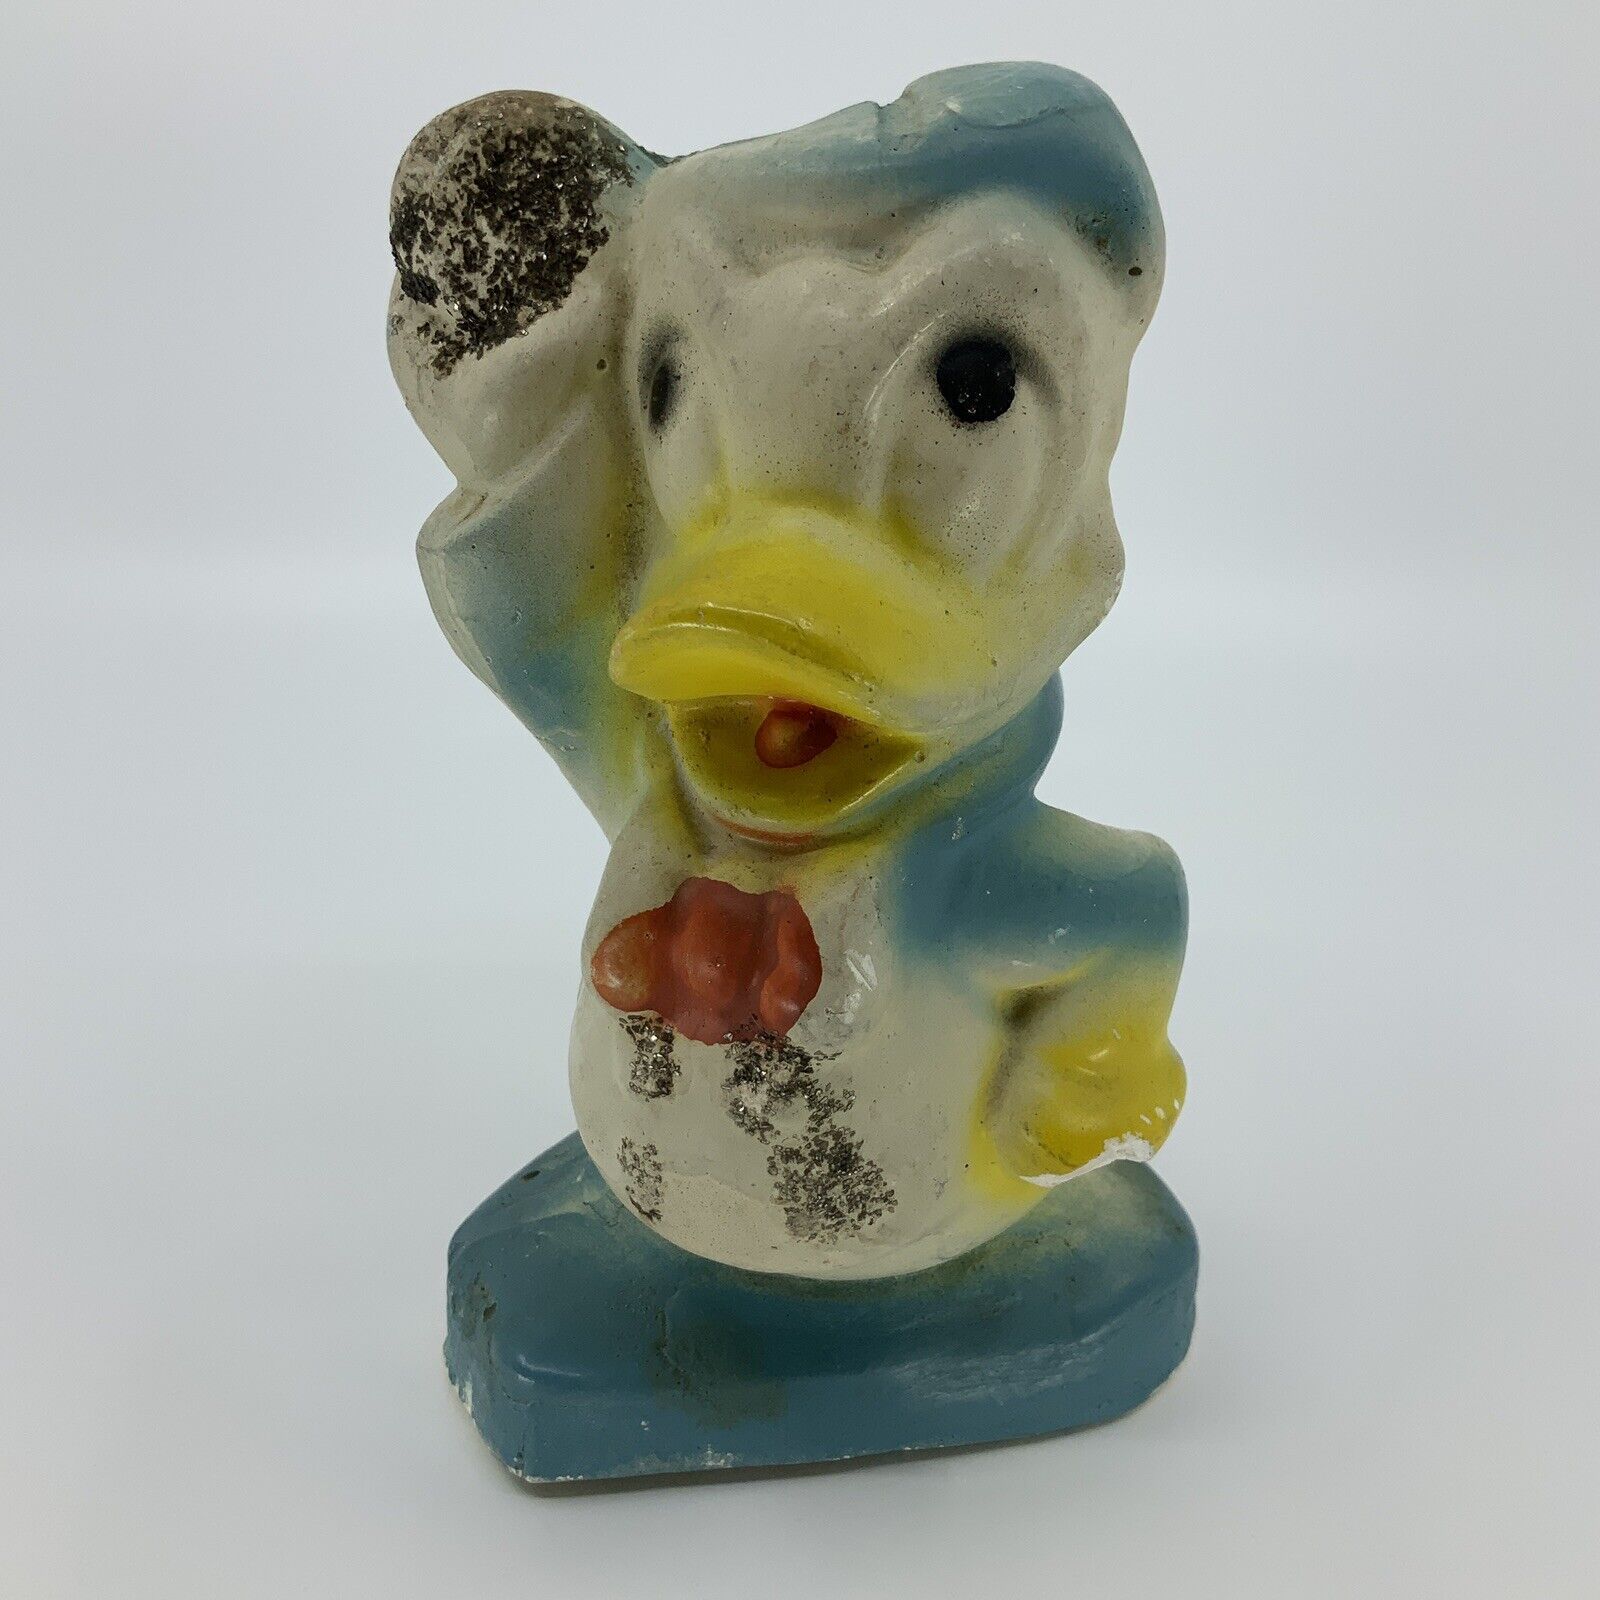 Vintage Chalkware Carnival Prize Donald Duck Figurine 6.25